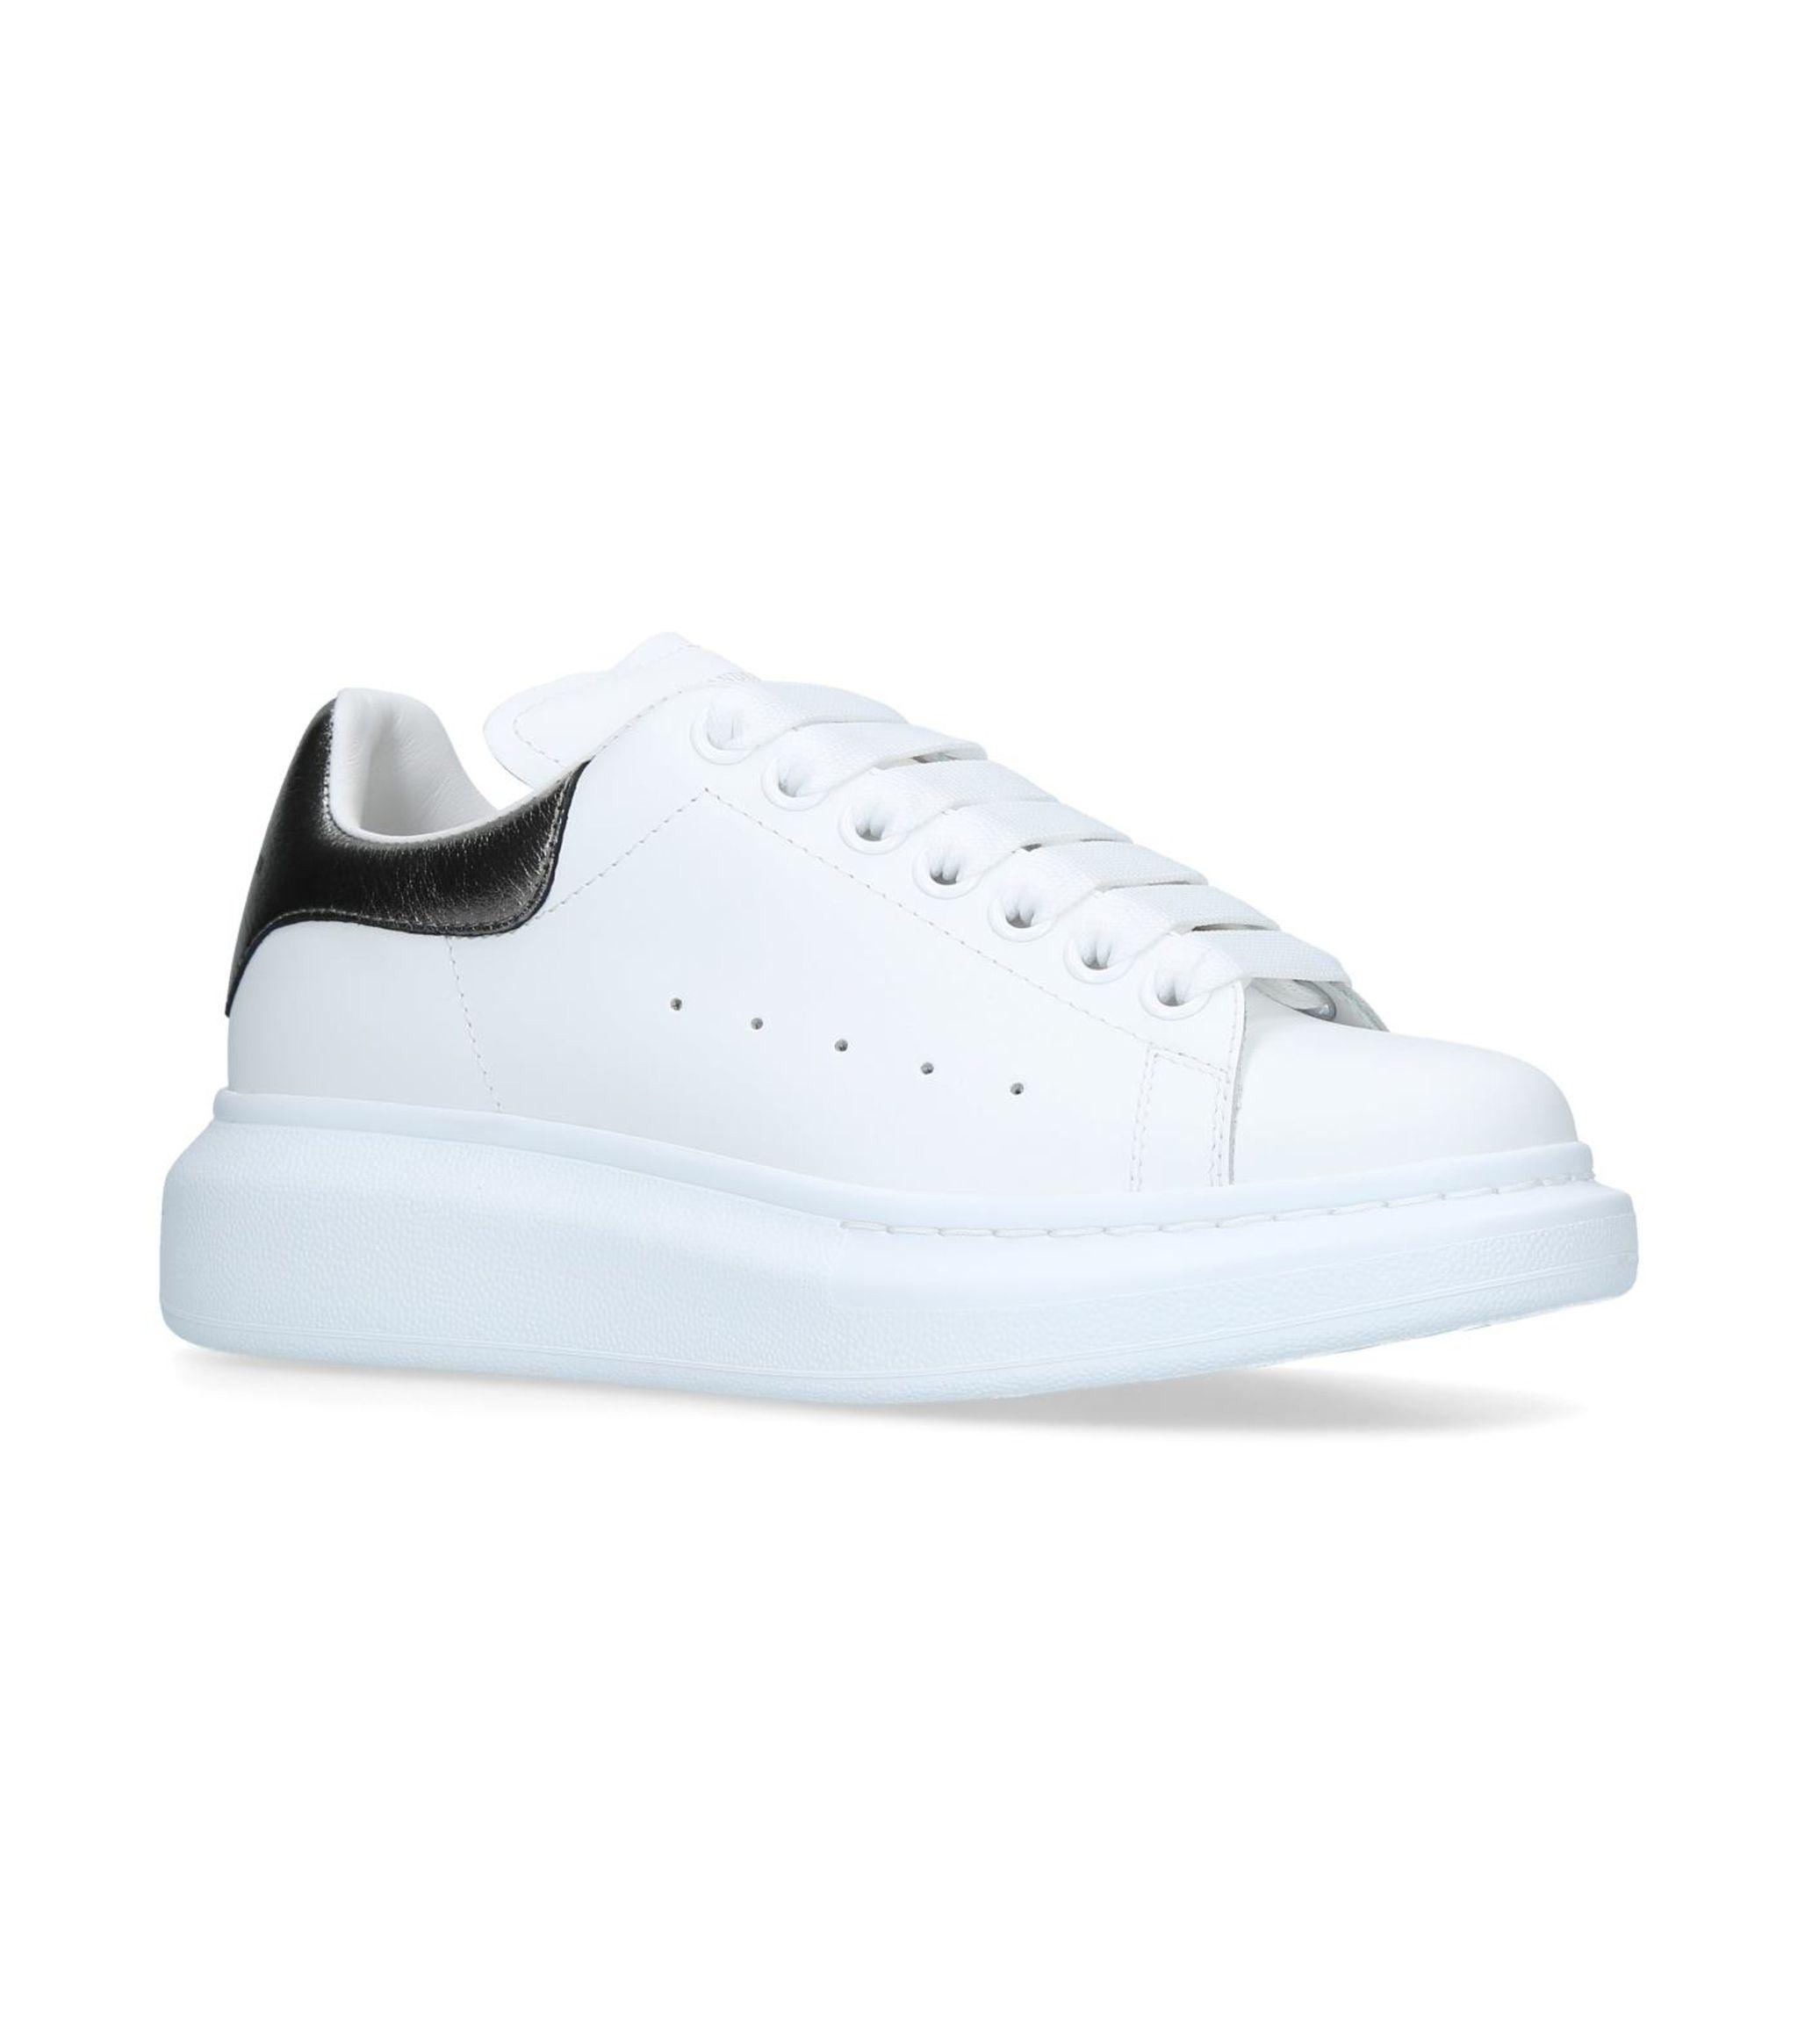 Alexander McQueen Leather Runway Sneakers in White - Lyst